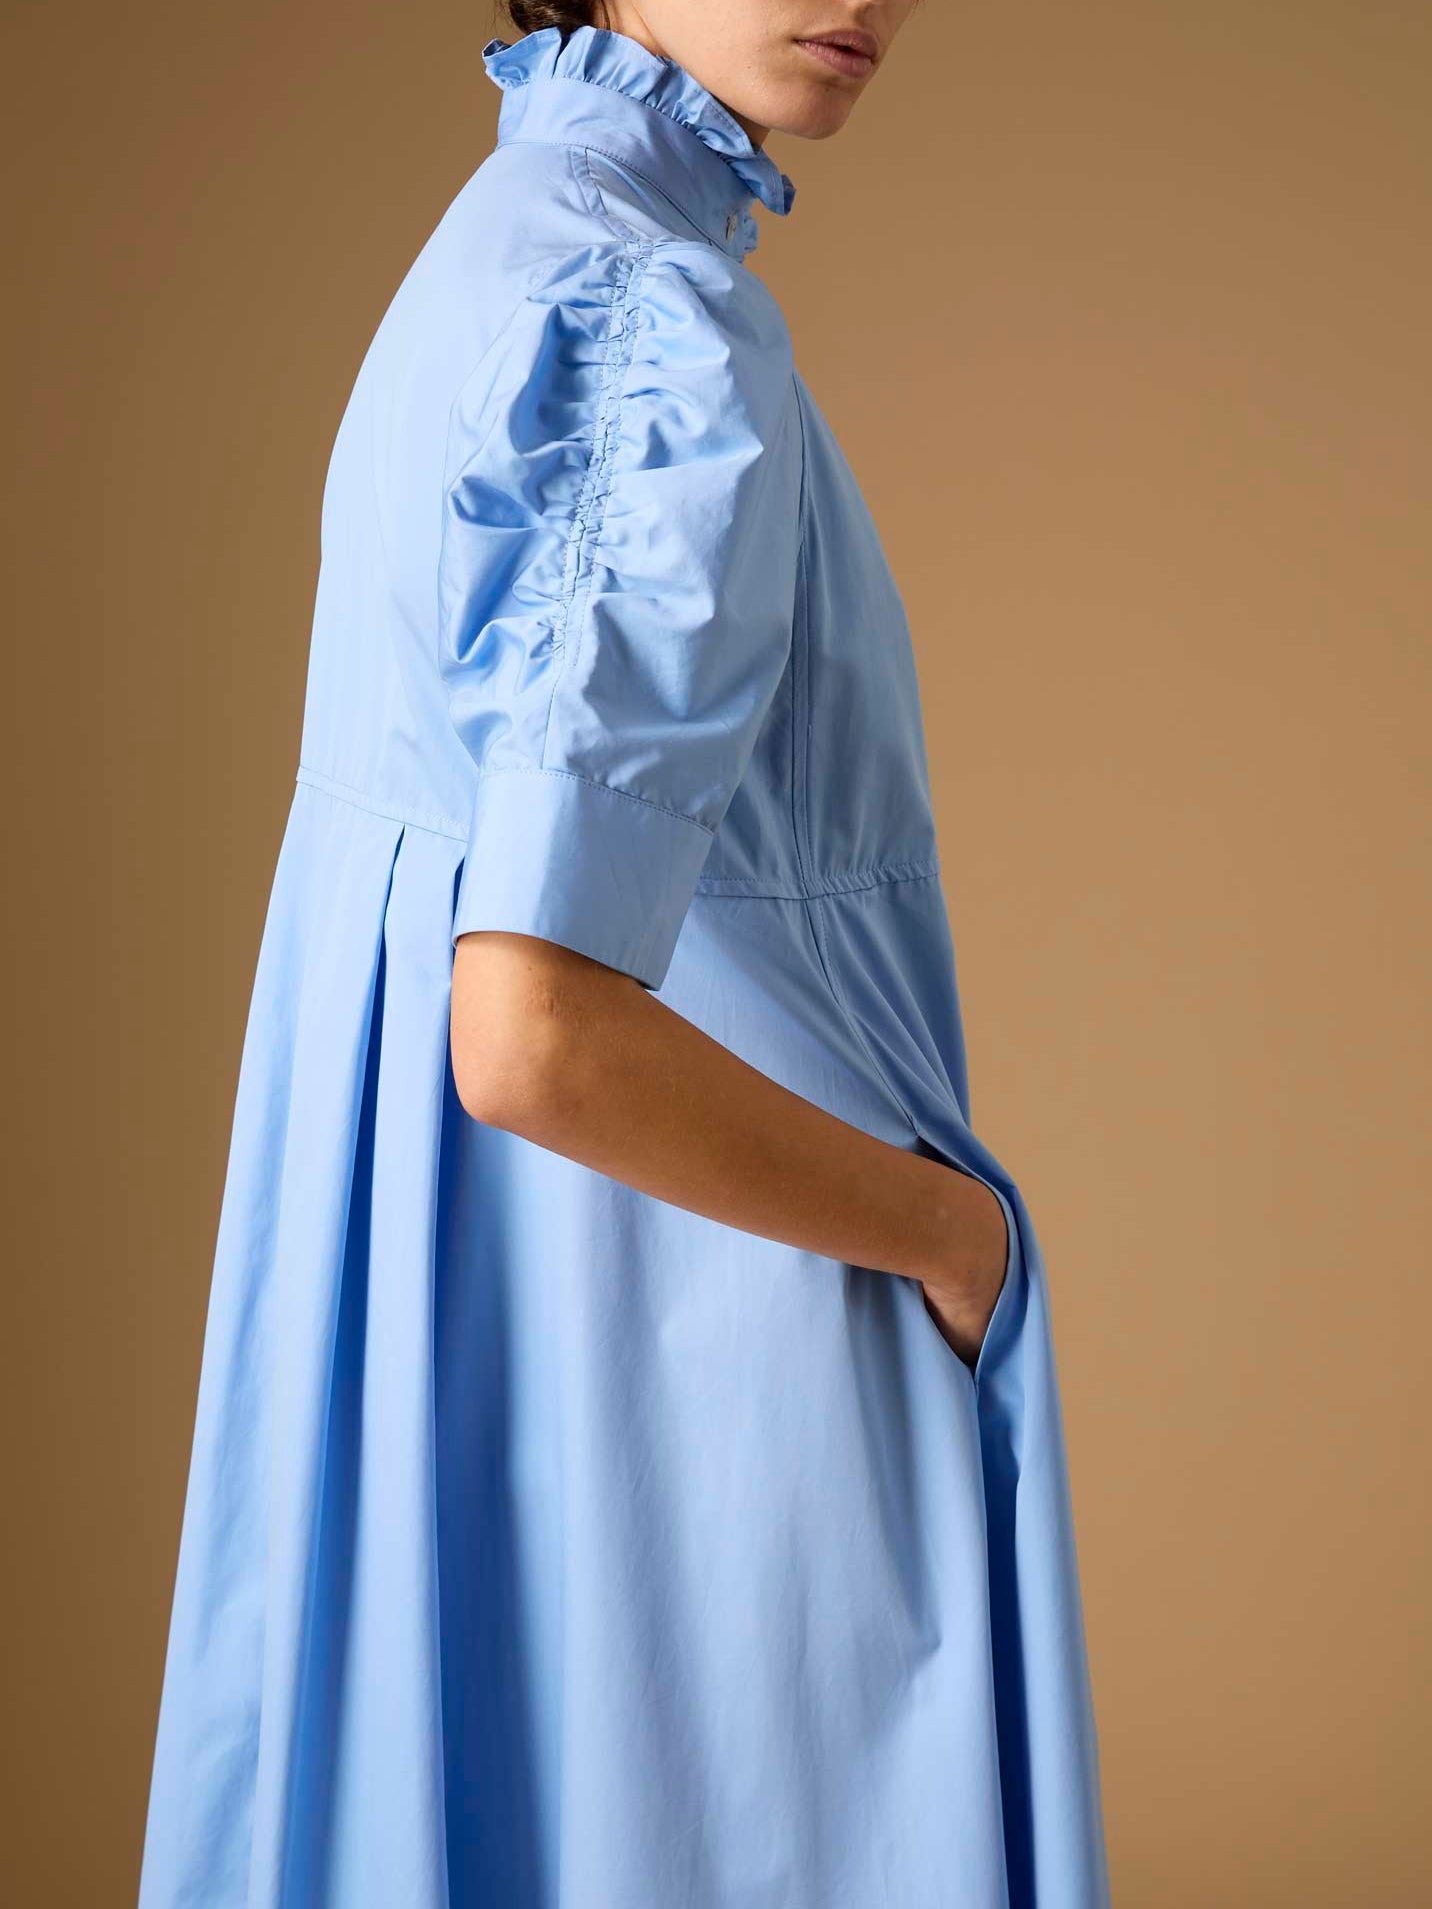 Side Sleeve detail of Venetia Plain Poplin Blue Dress by Thierry Colson